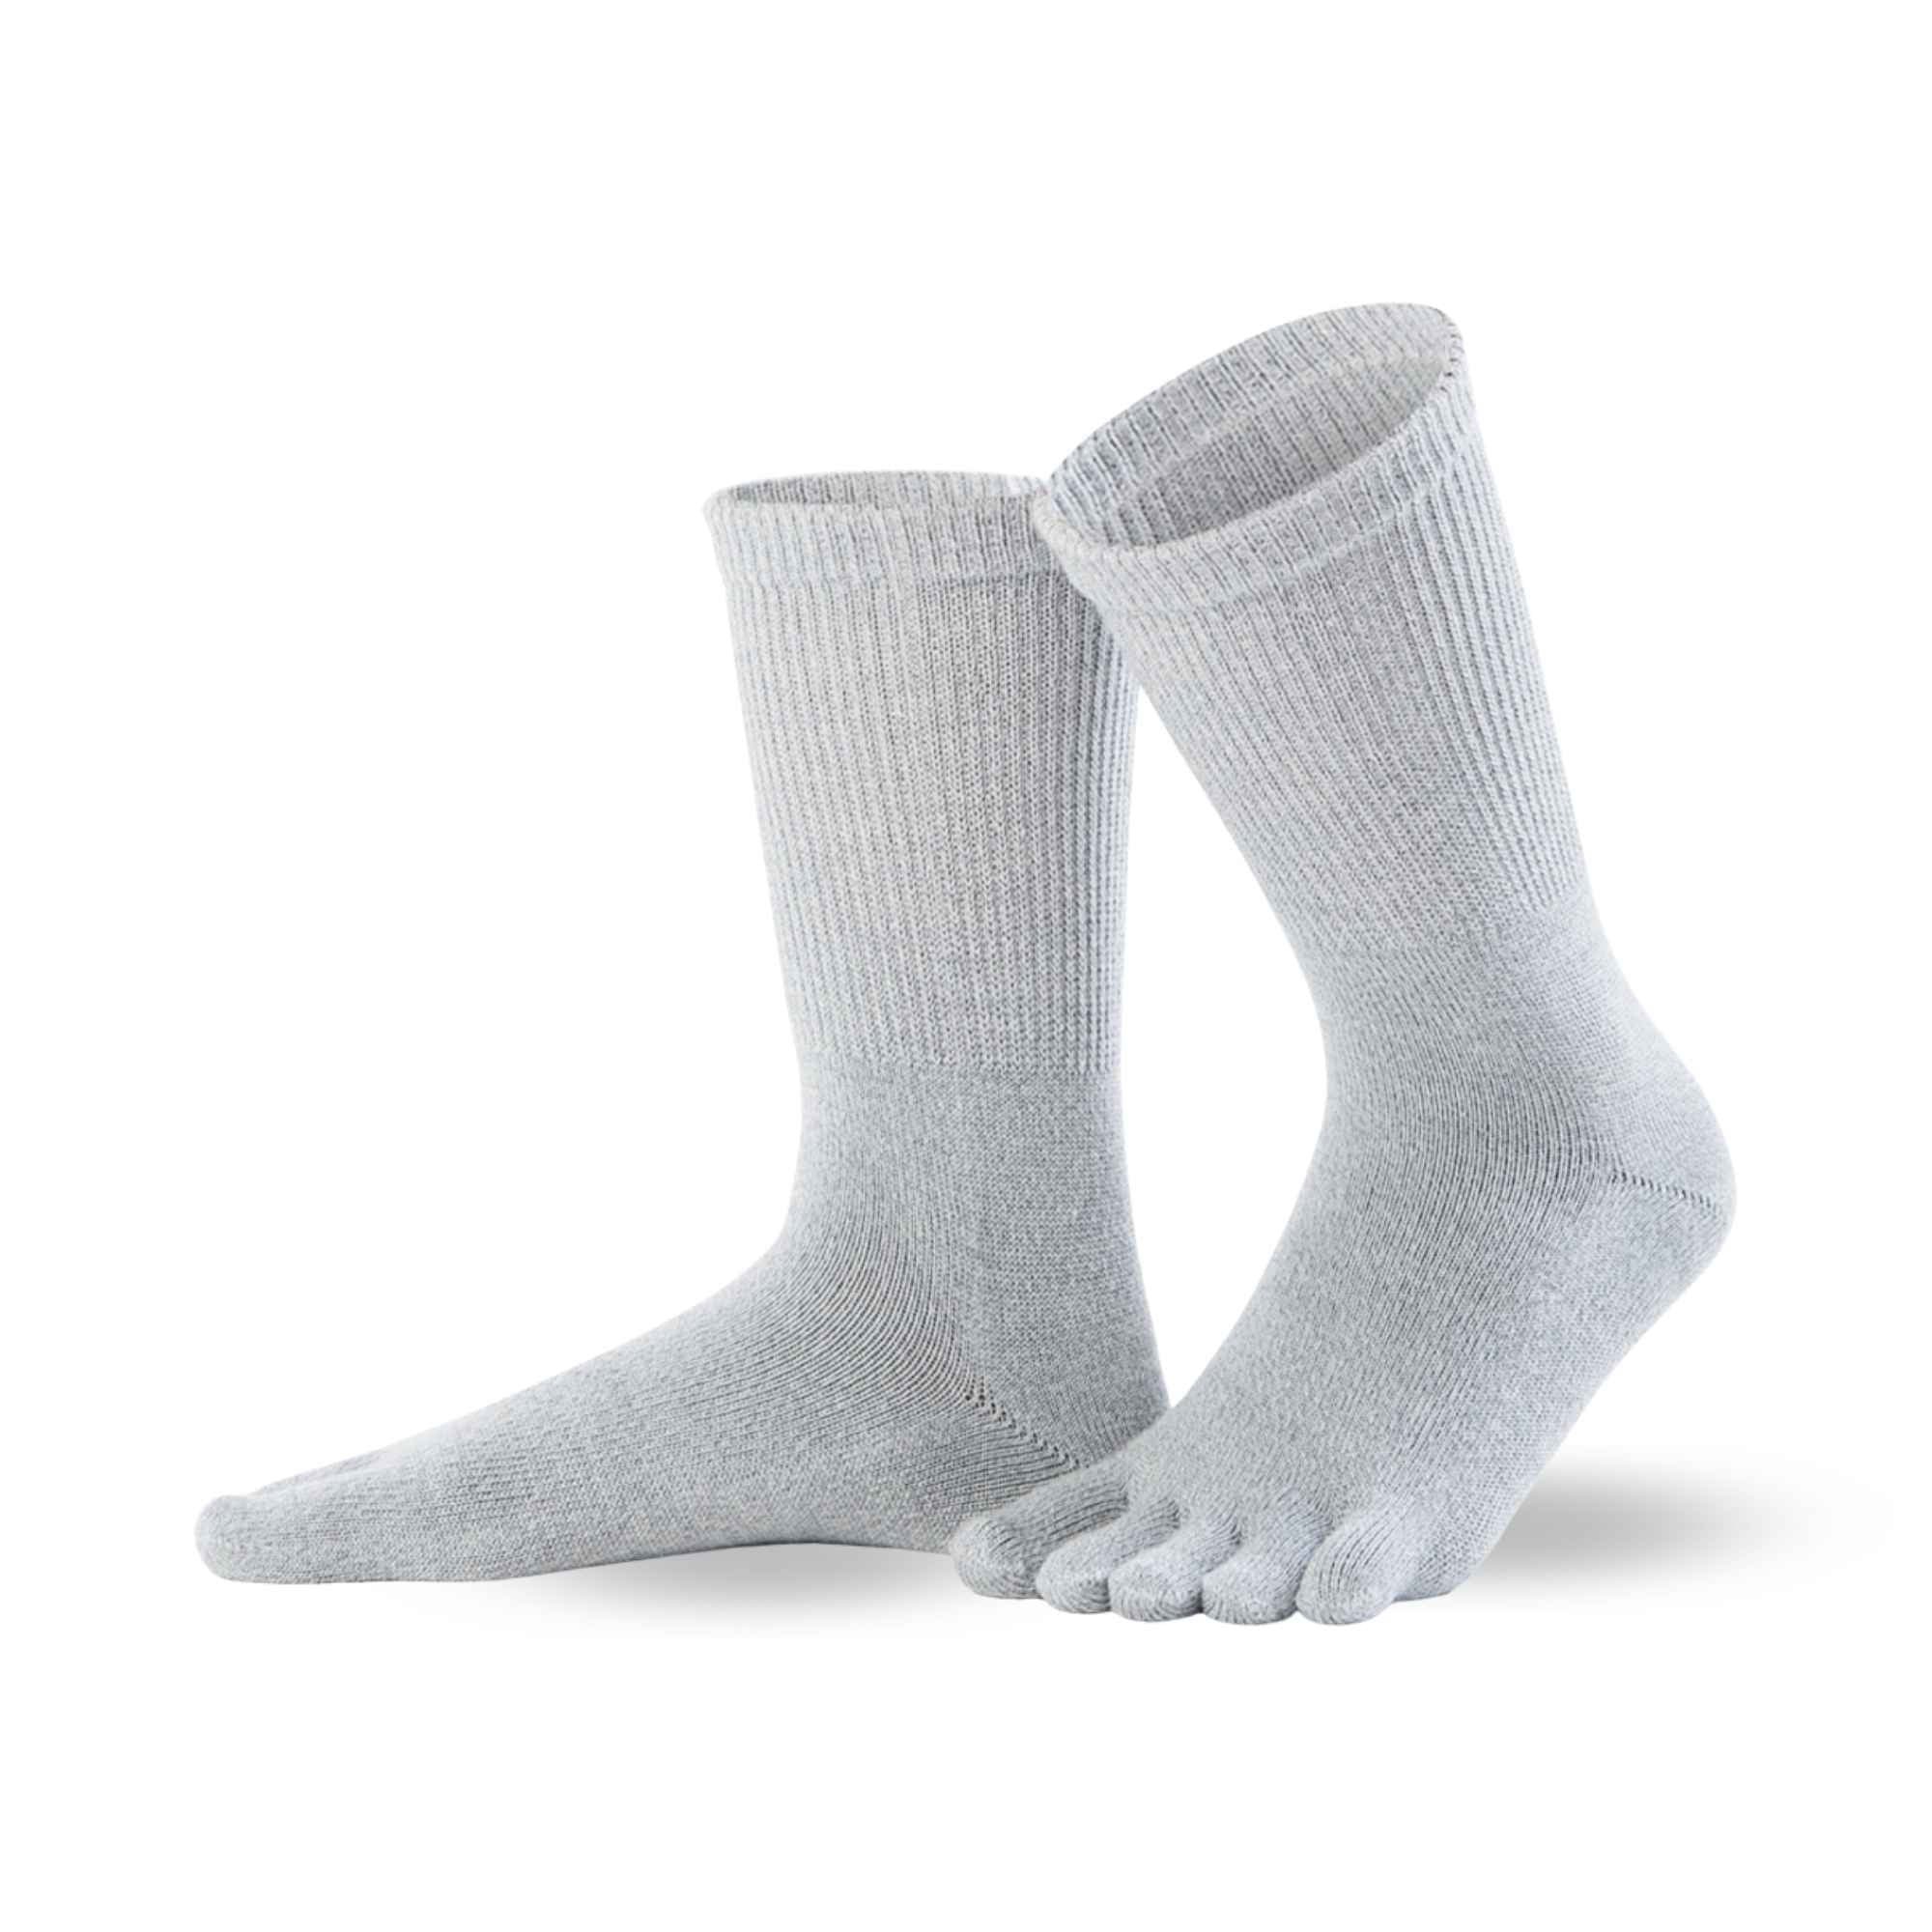 Knitido Merino Optimo toe socks made from merino wool - Knitido®